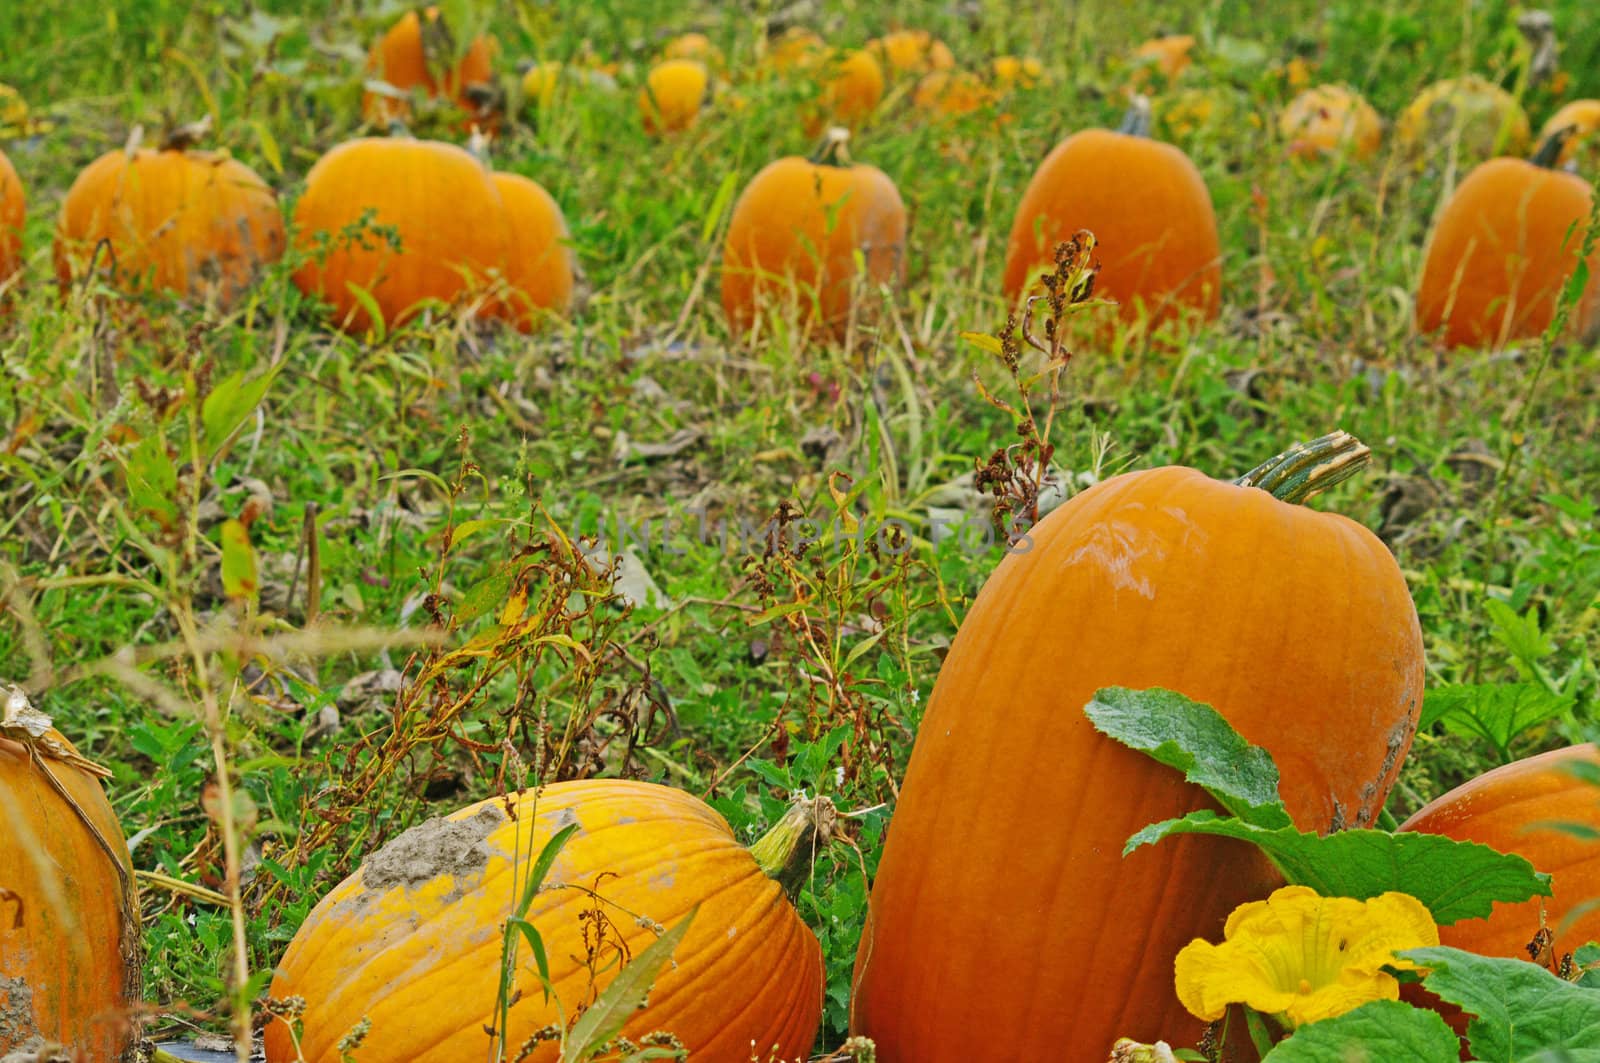 Pumpkins in the field in rows